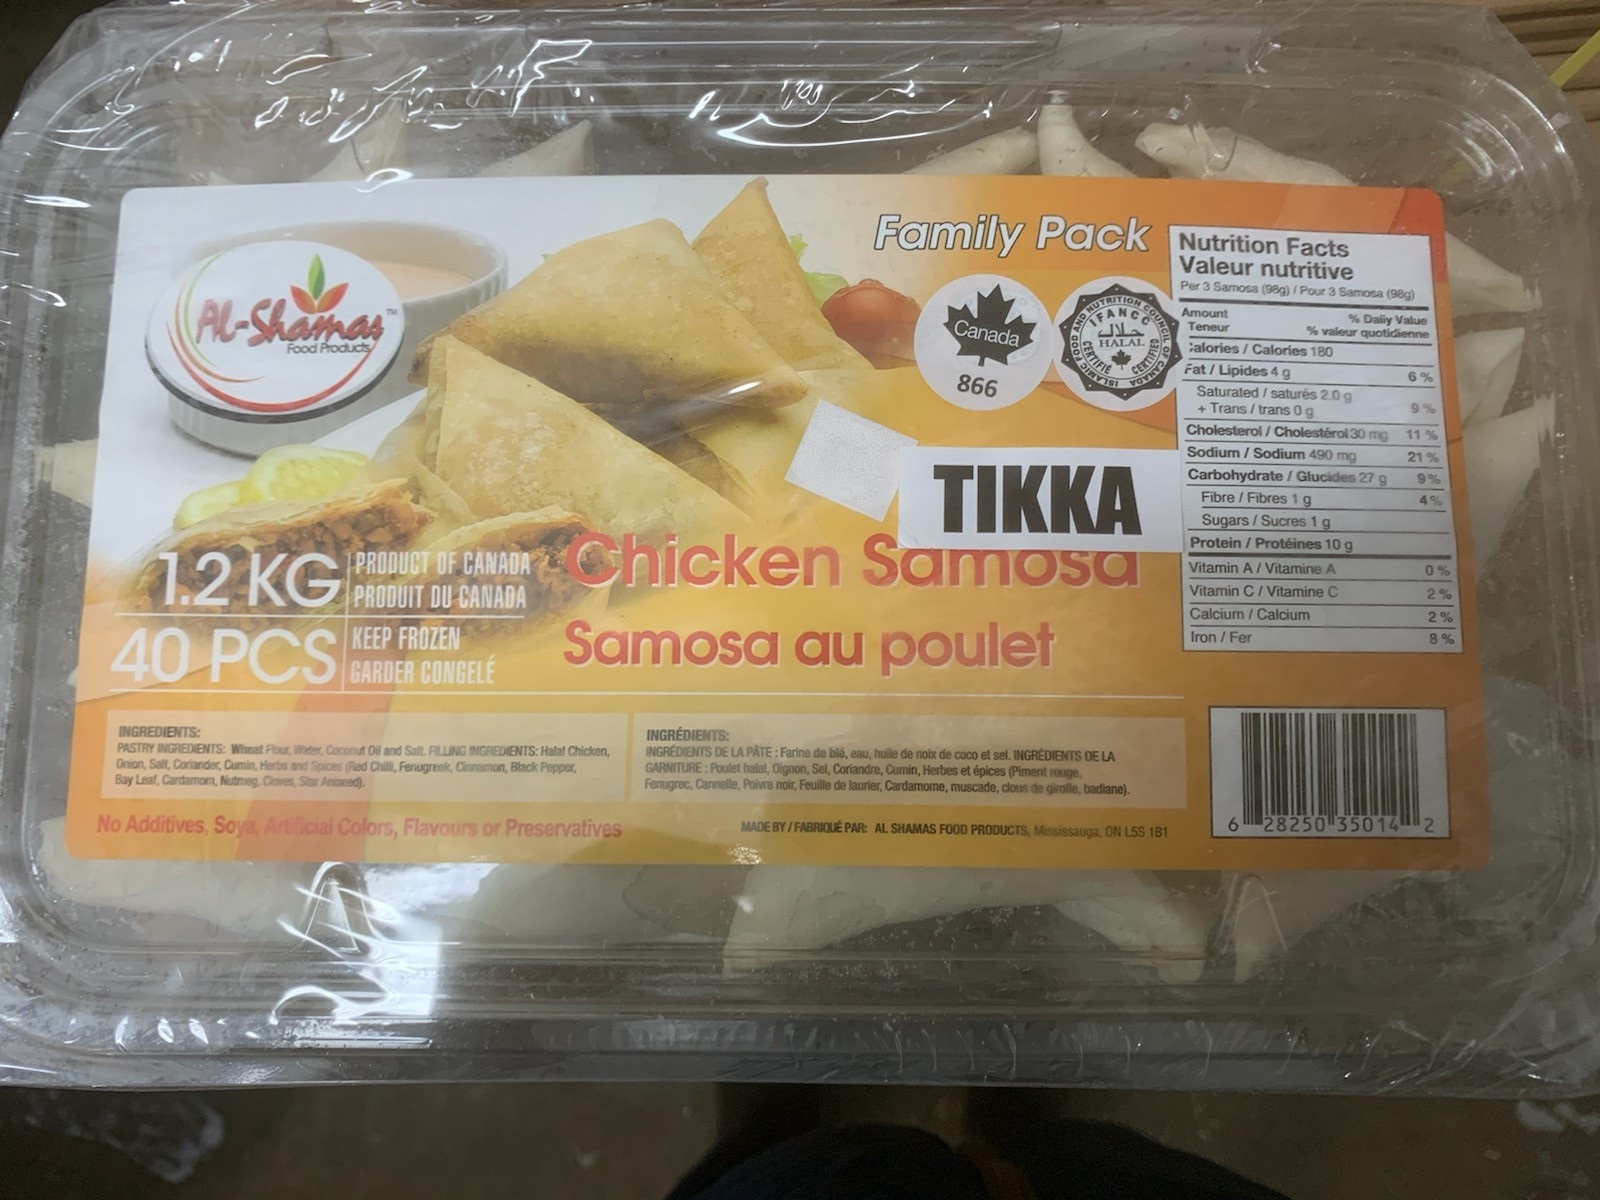 Al-Shamas Food Products : Samosa au poulet Tikka - 1.2 kg